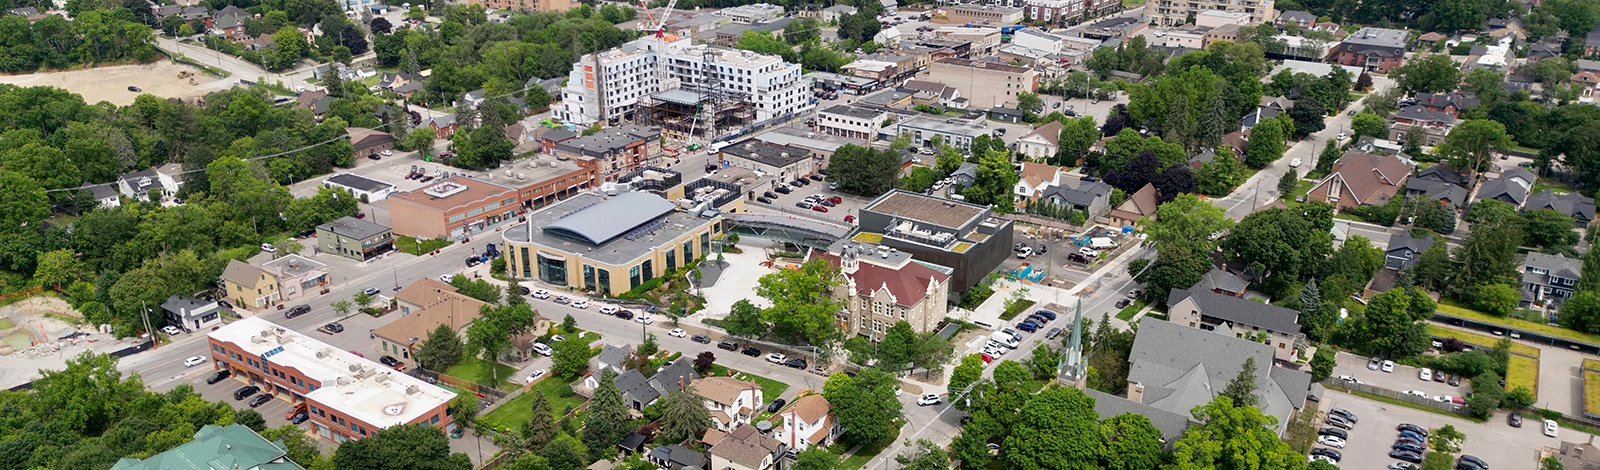 Aurora Town Square aerial view